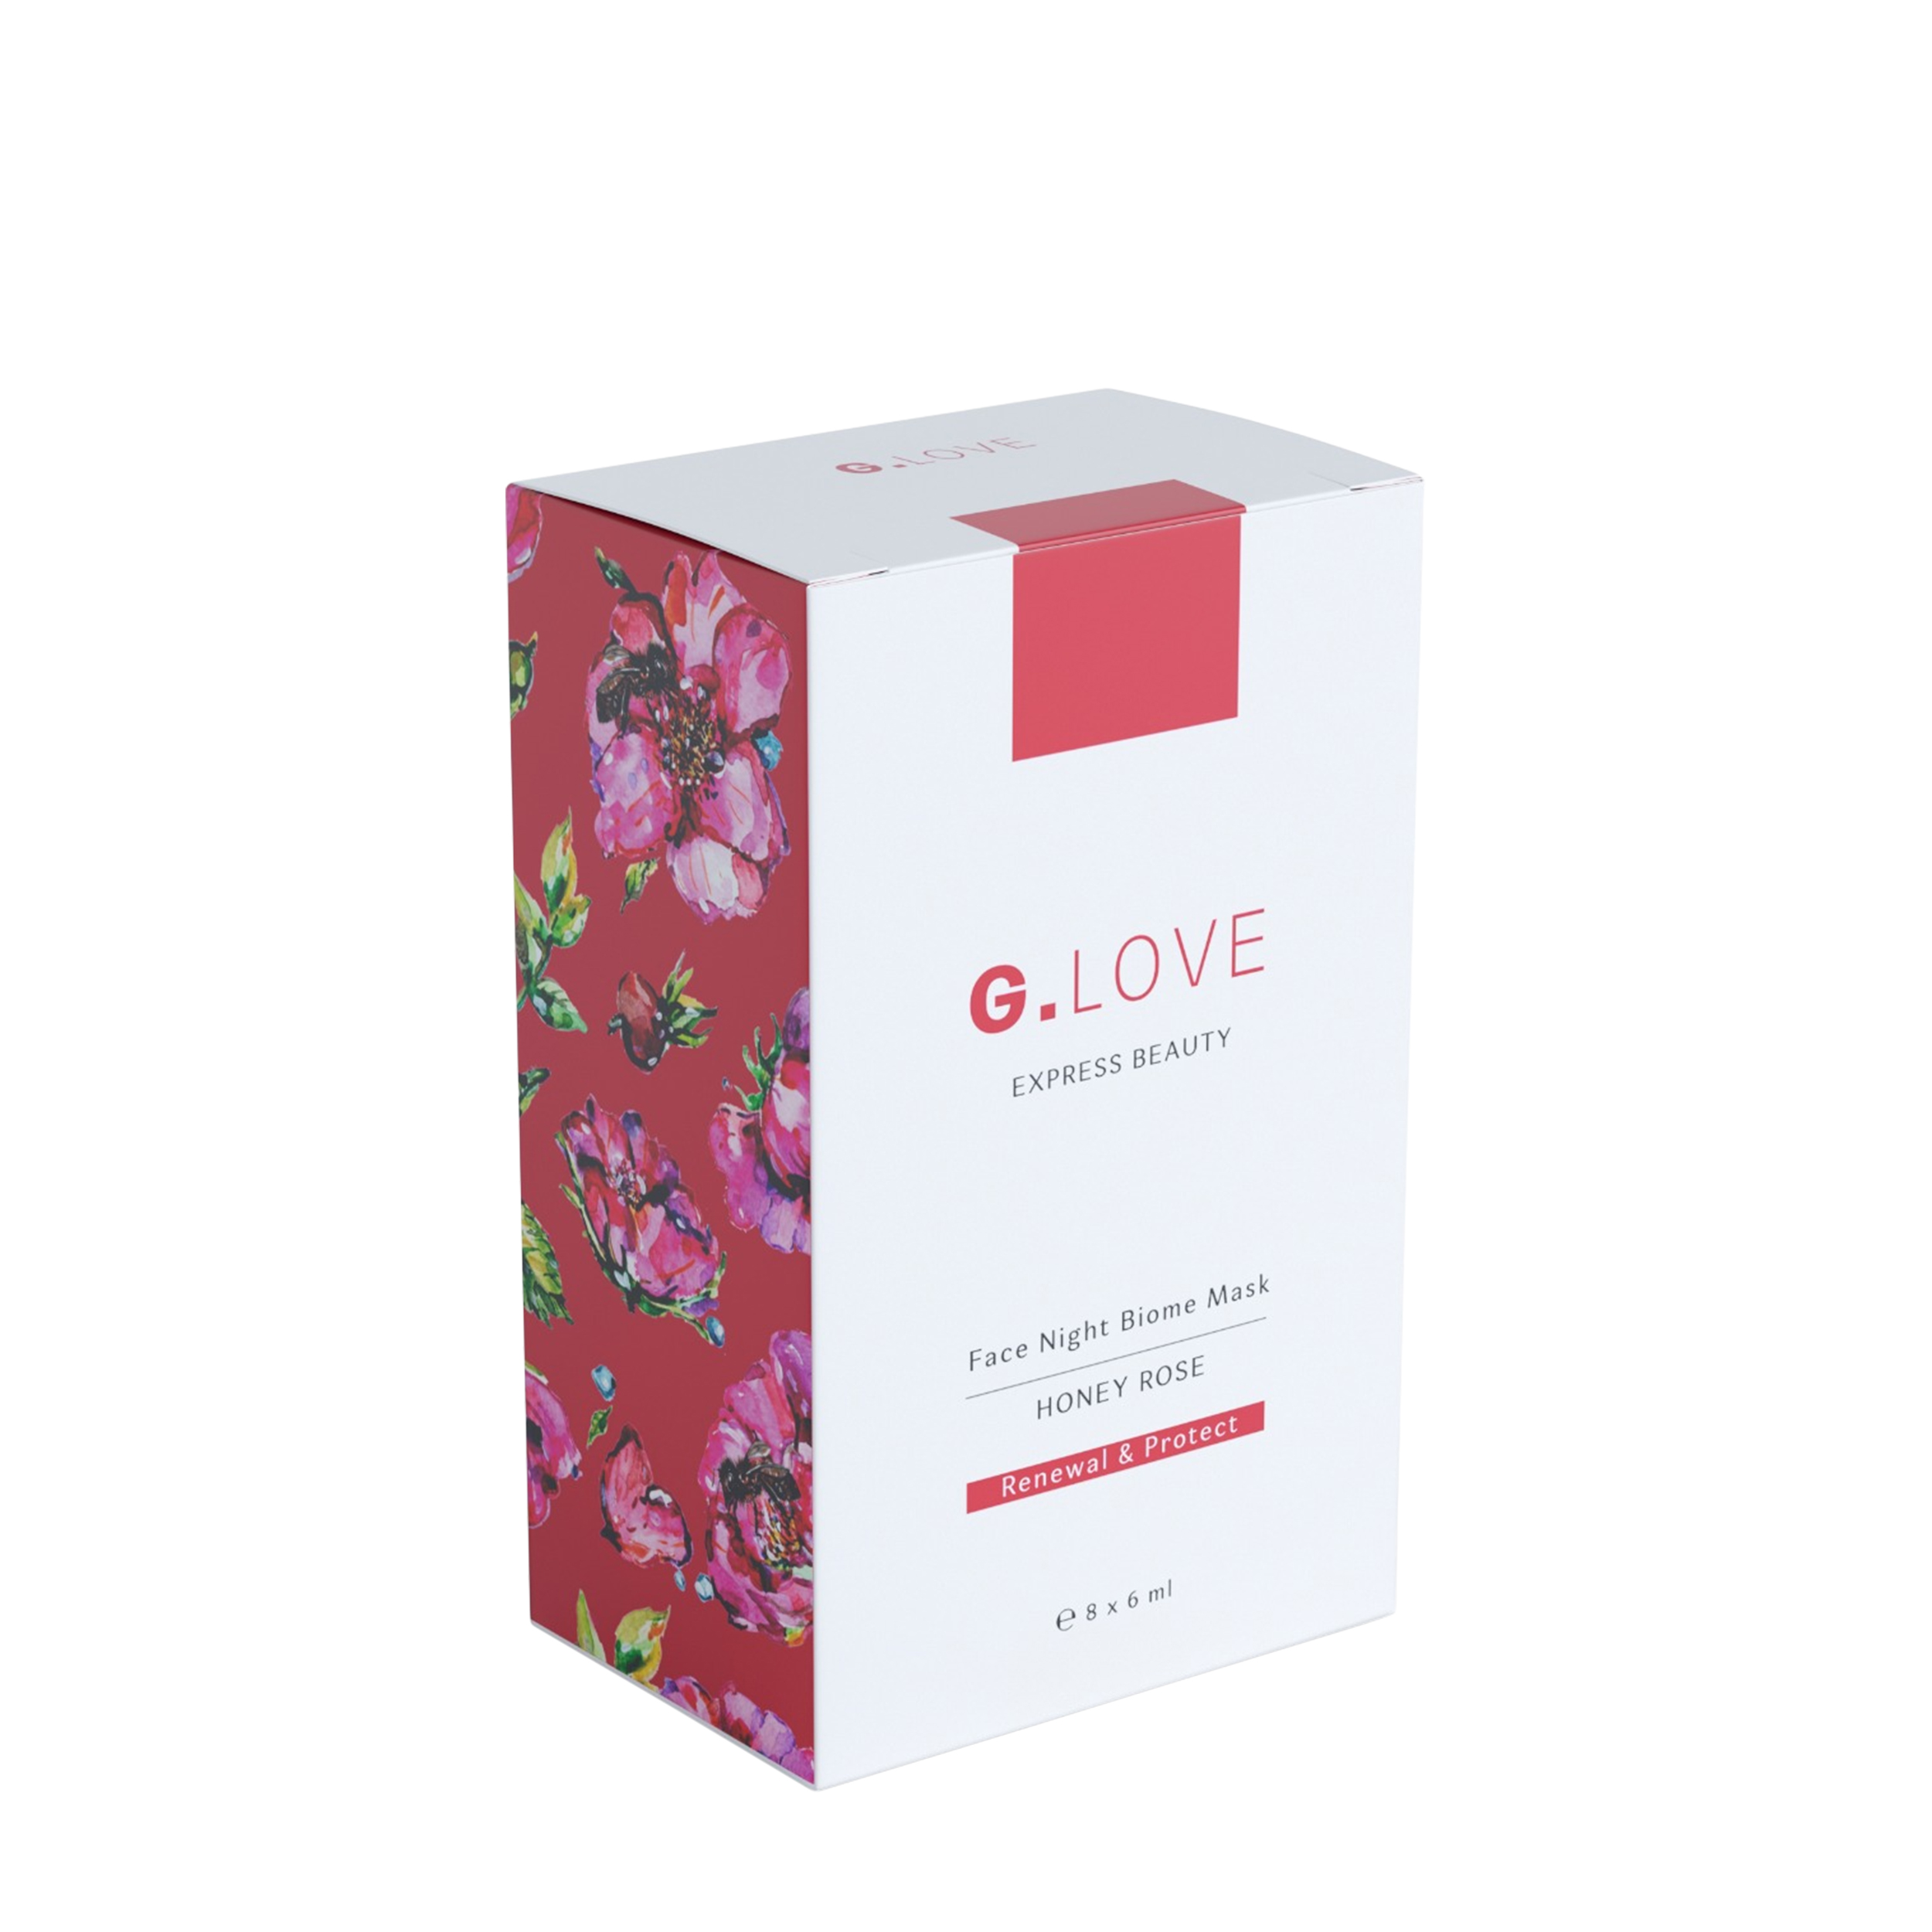 G.LOVE G.LOVE Ночная маска для восстановления микробиома кожи Honey Rose от Foambox